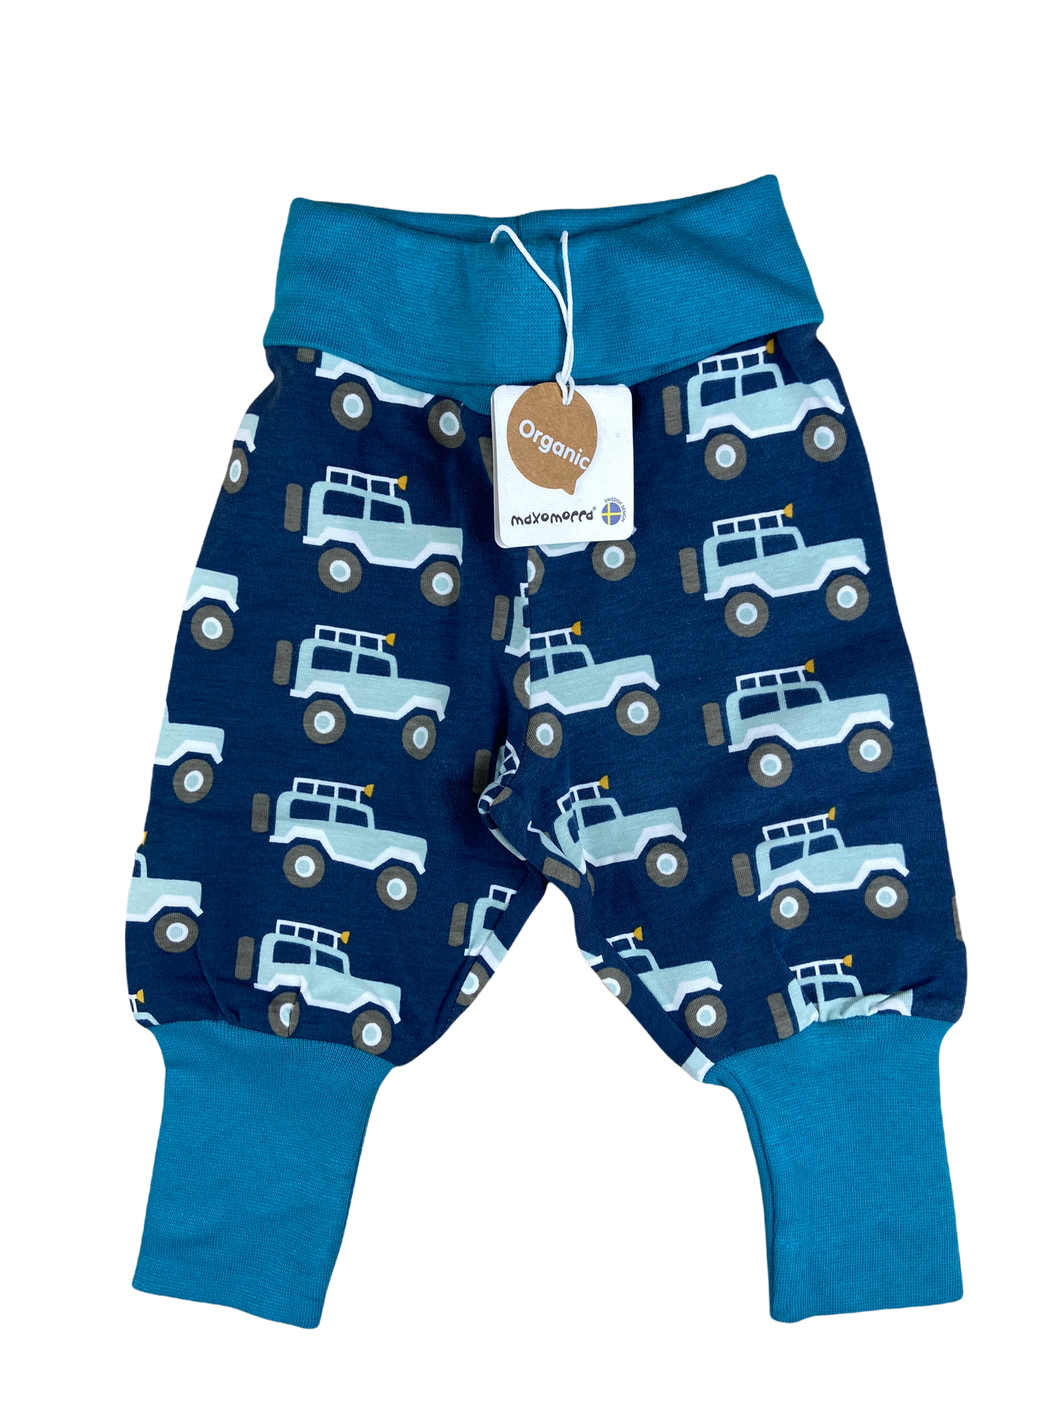 Maxomorra Bundhose Autos dunkleblau Sale GOTS nachhaltige Kinderkleidung Tildi